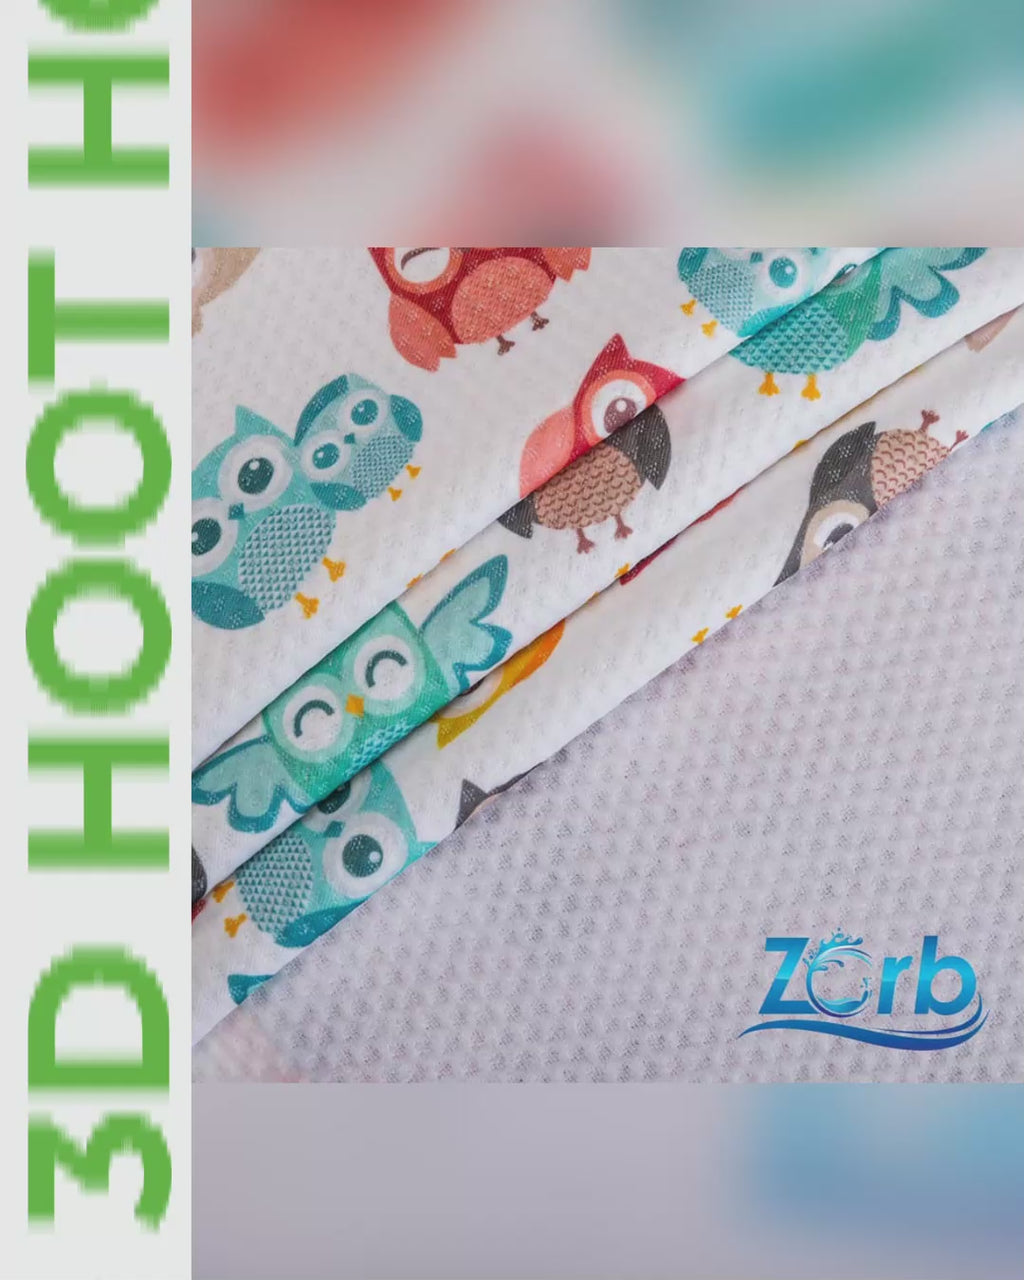 Zorb® 3D Bamboo Dimple (10cm x 10cm Swatch) - Cuddle Plush Fabrics